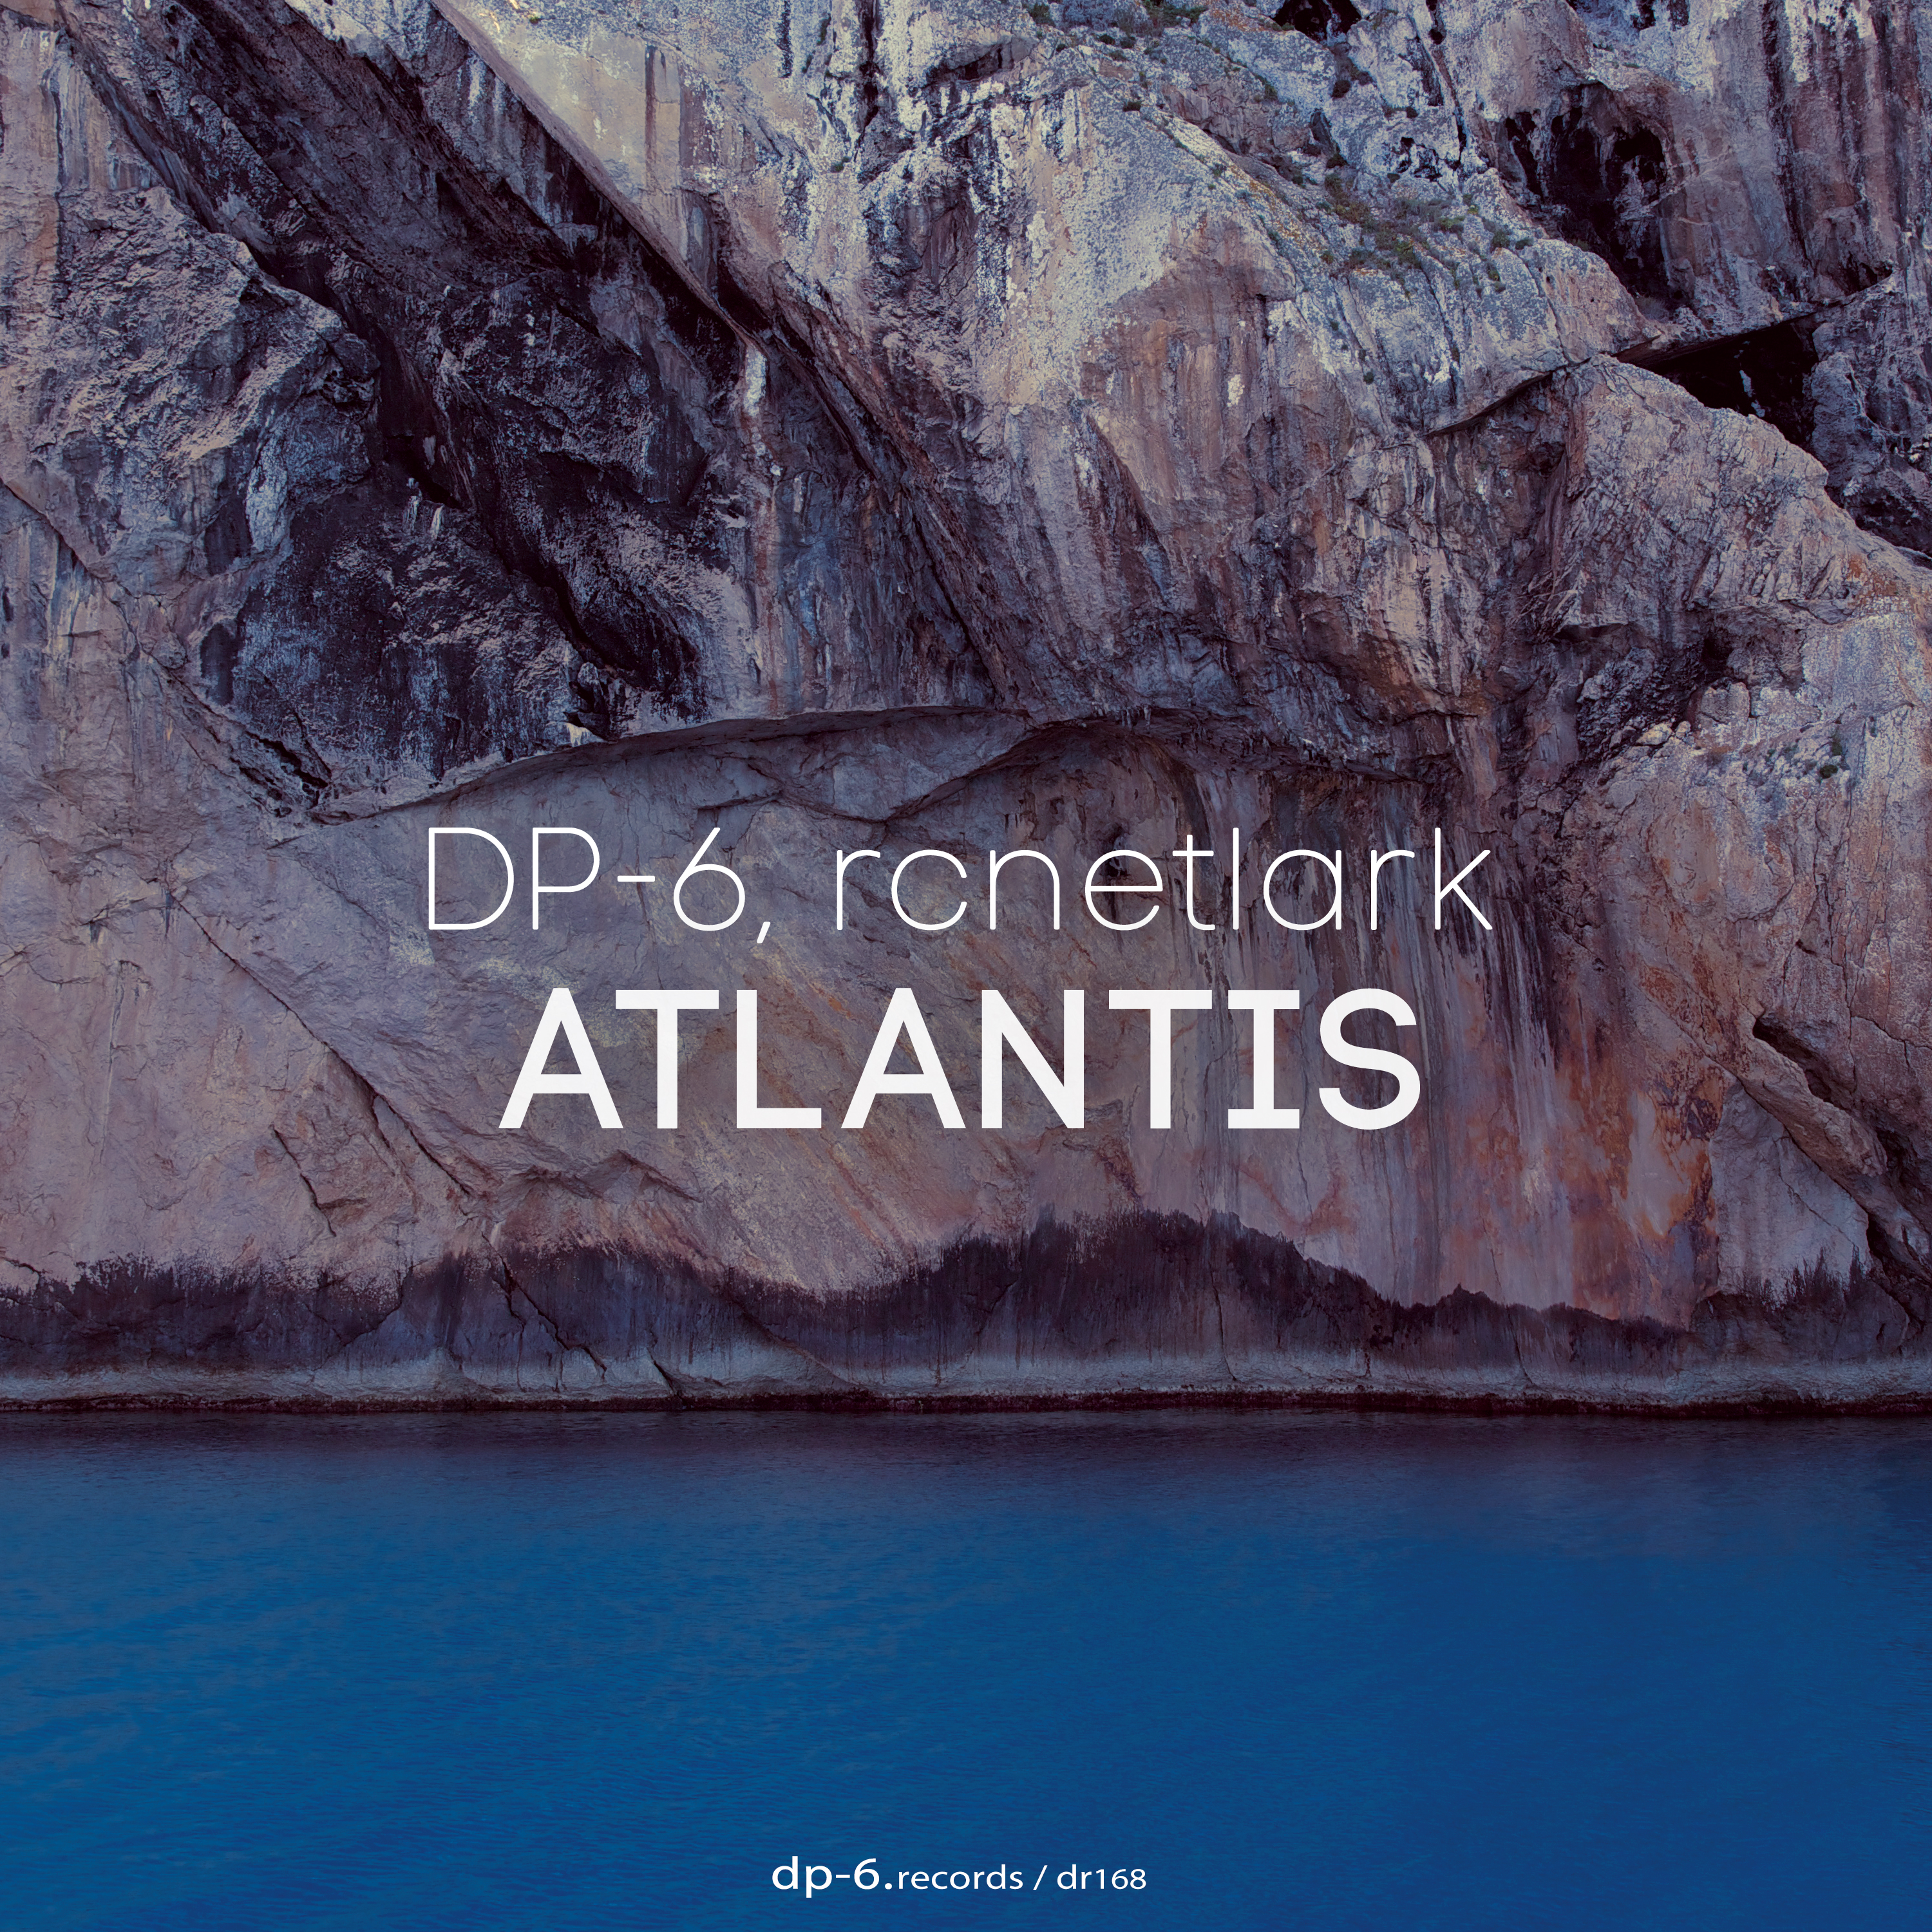 DP-6, rcnetlark: Atlantis